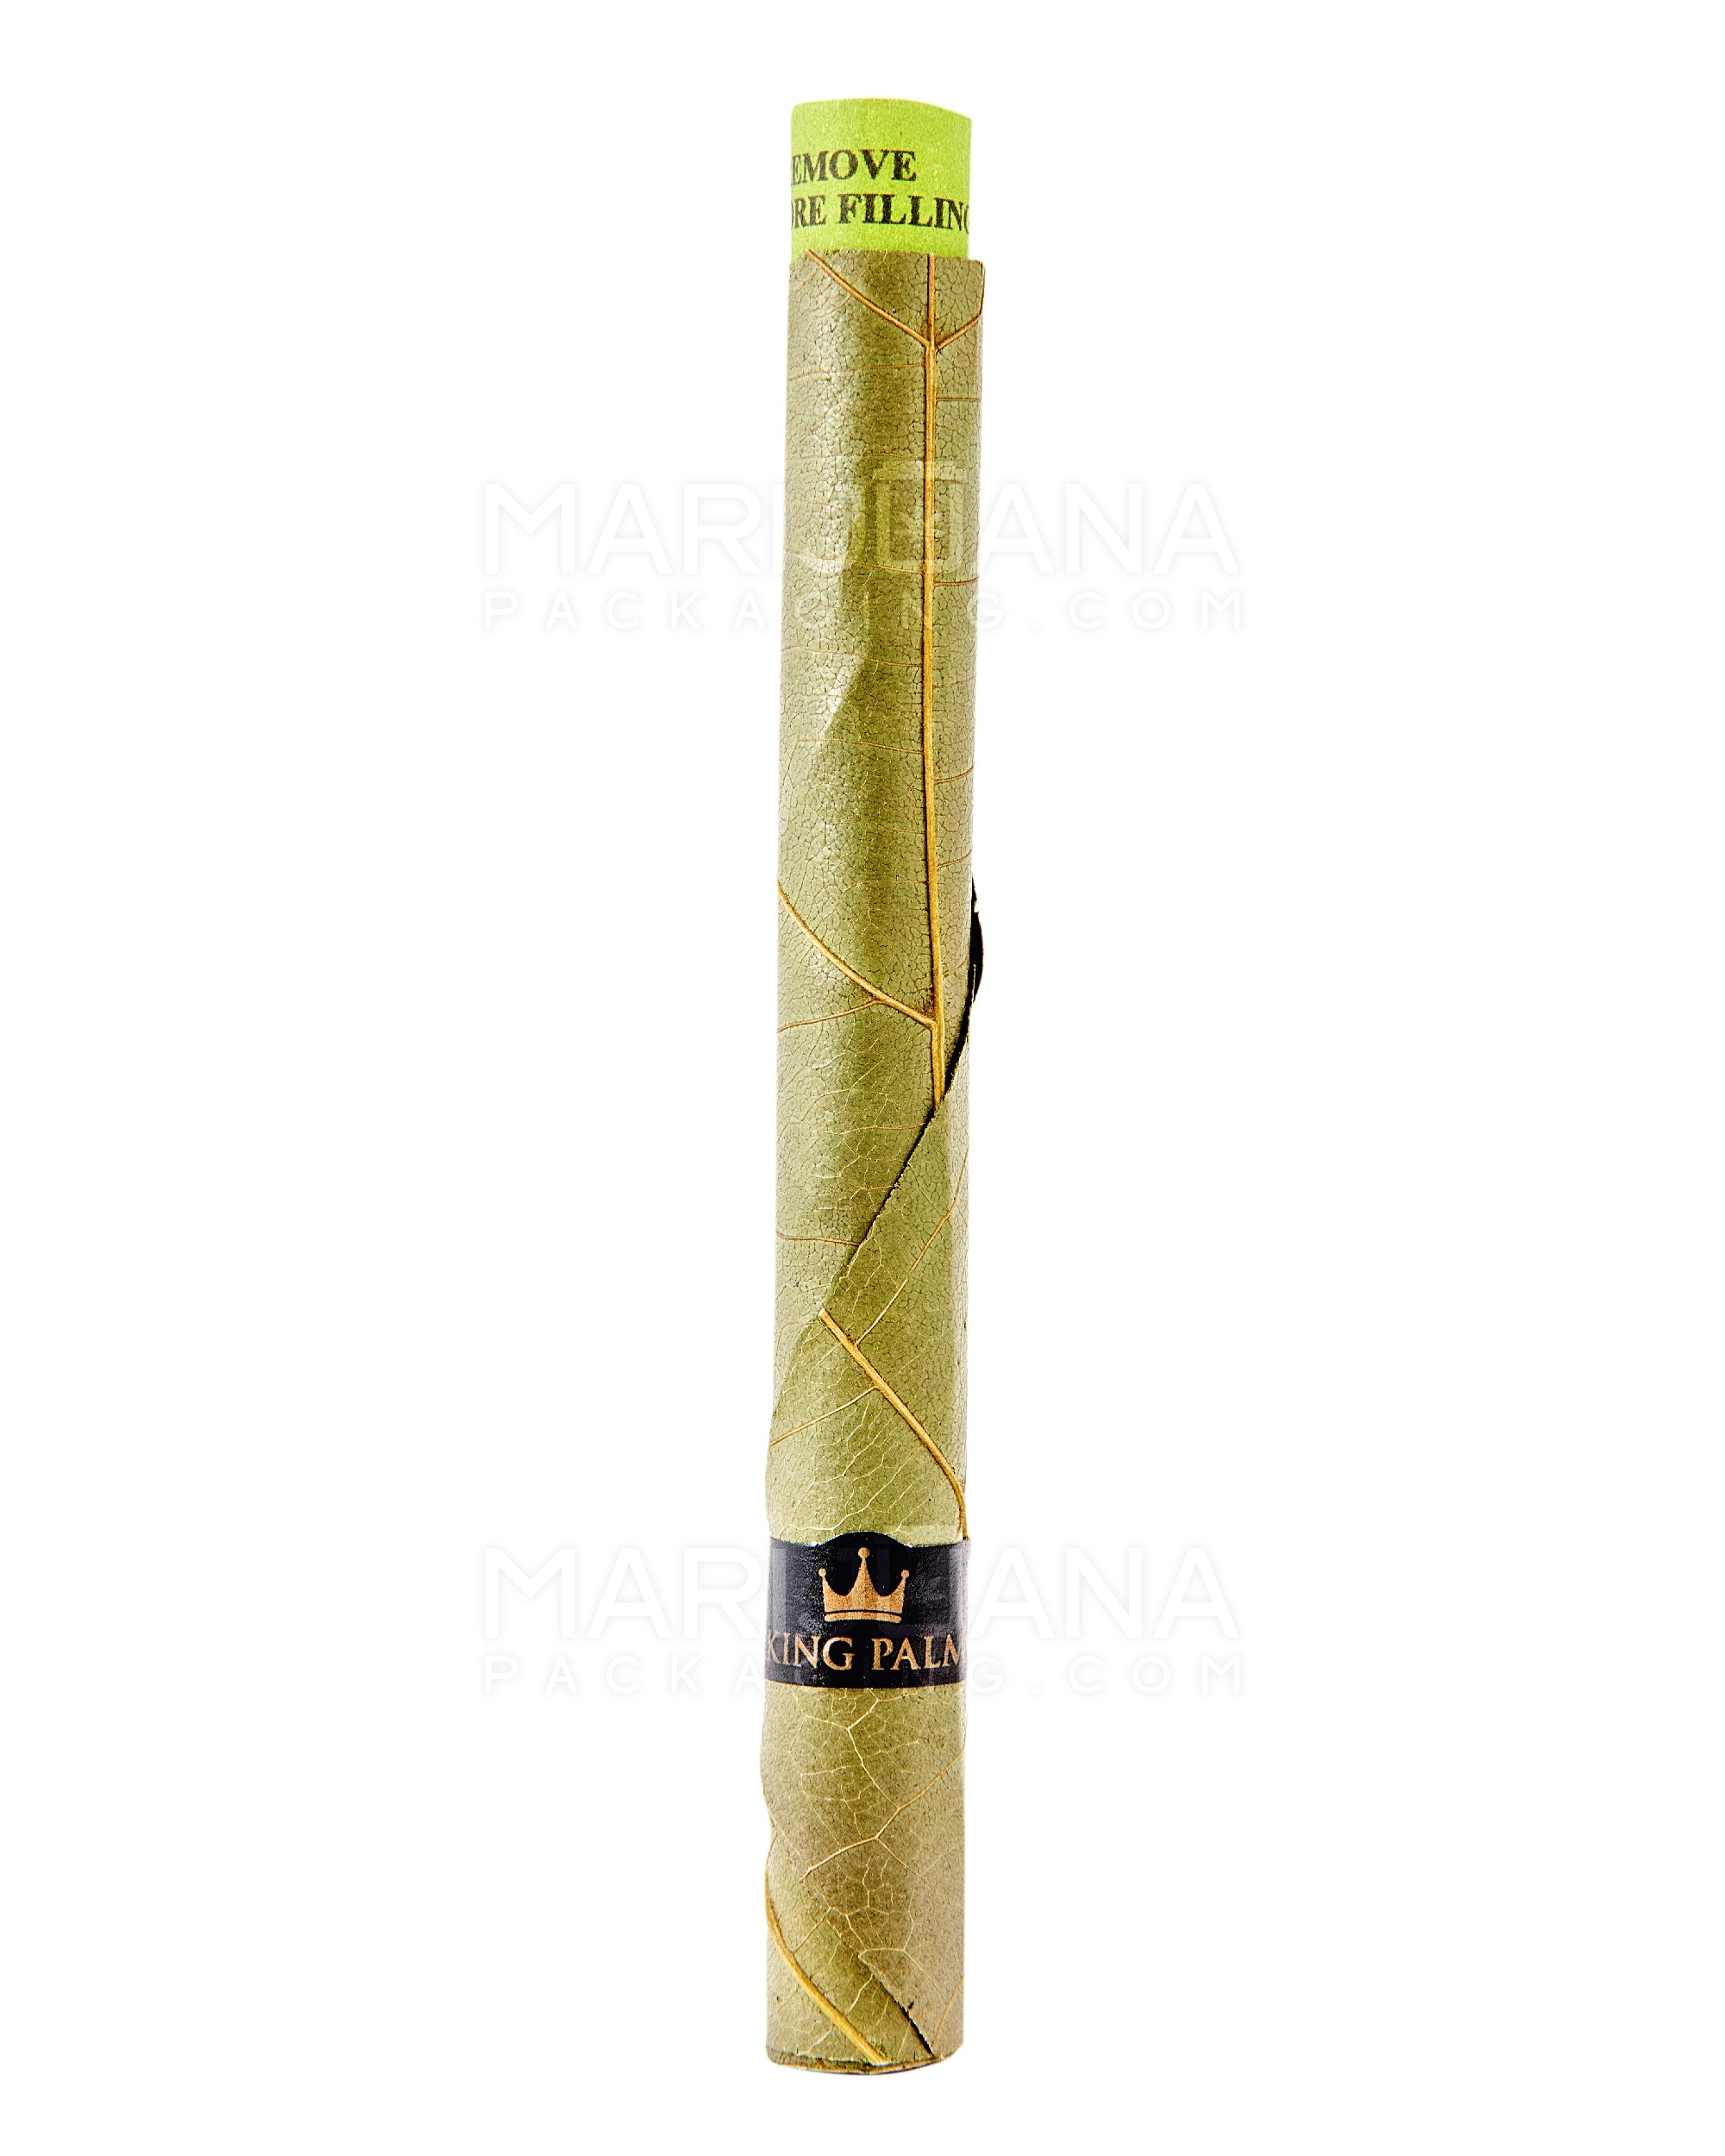 KING PALM | Slim Size Bulk Blunt Wraps | 105mm - Palm Leaf - 180 Count - 5